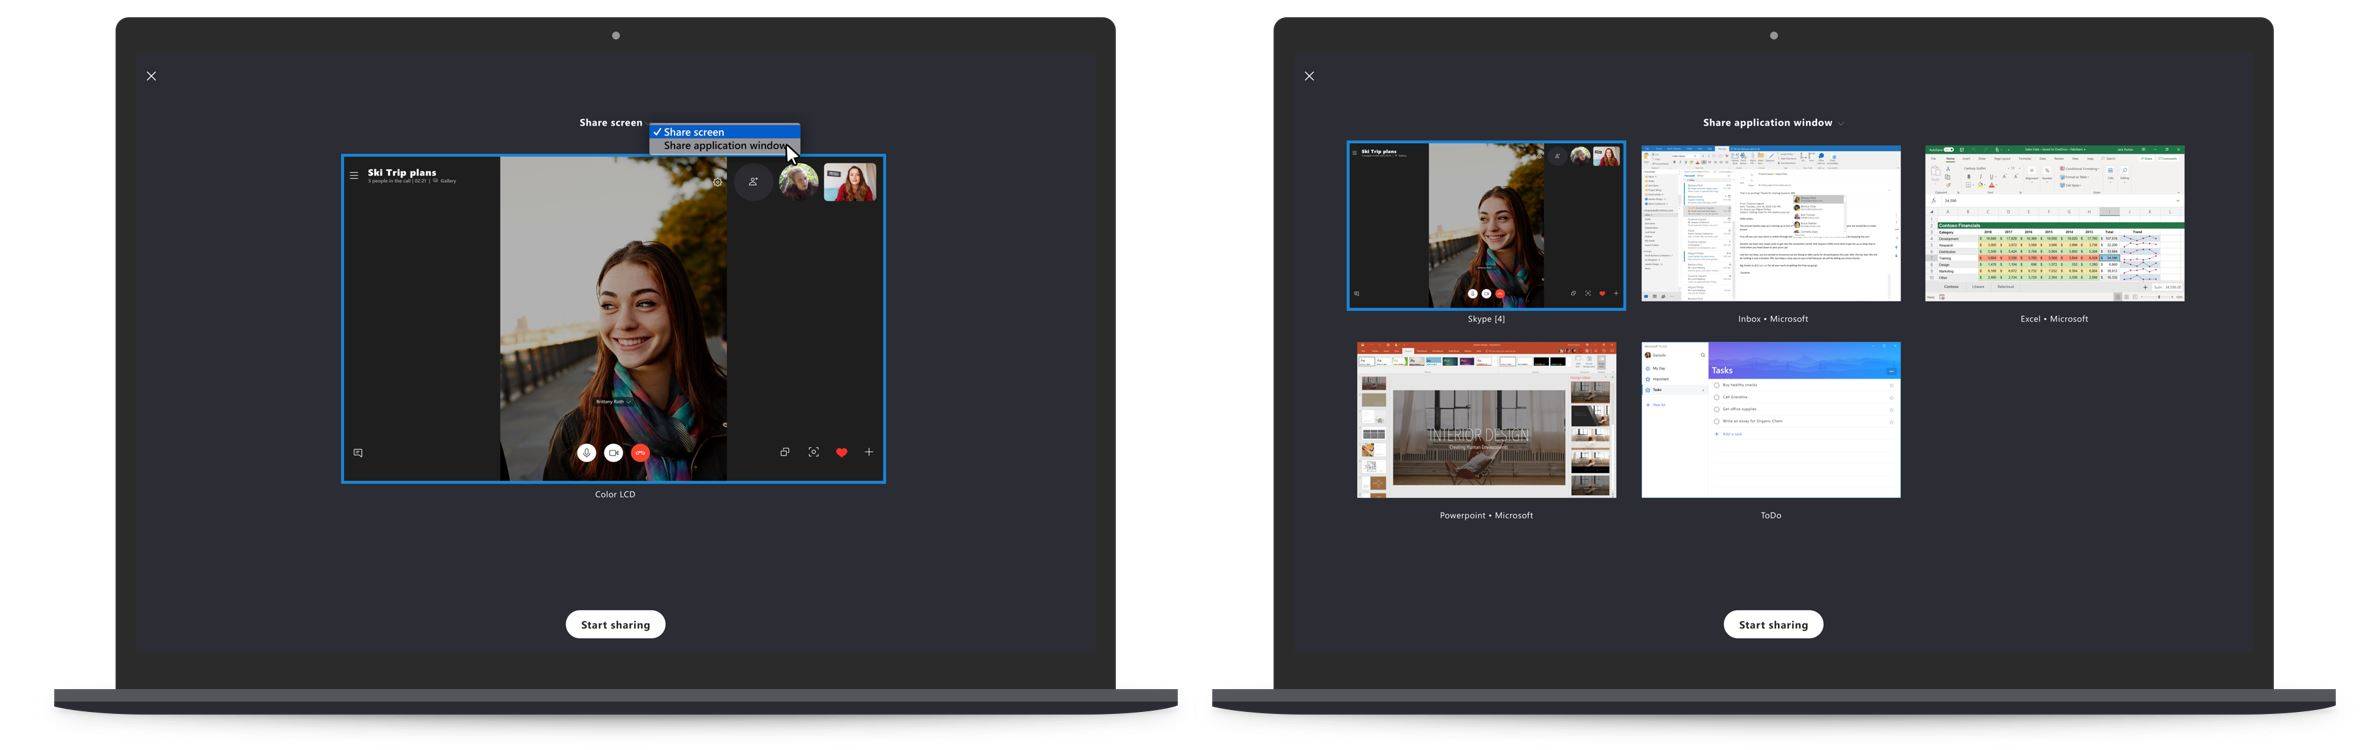 Skype compartir pantalla de una app